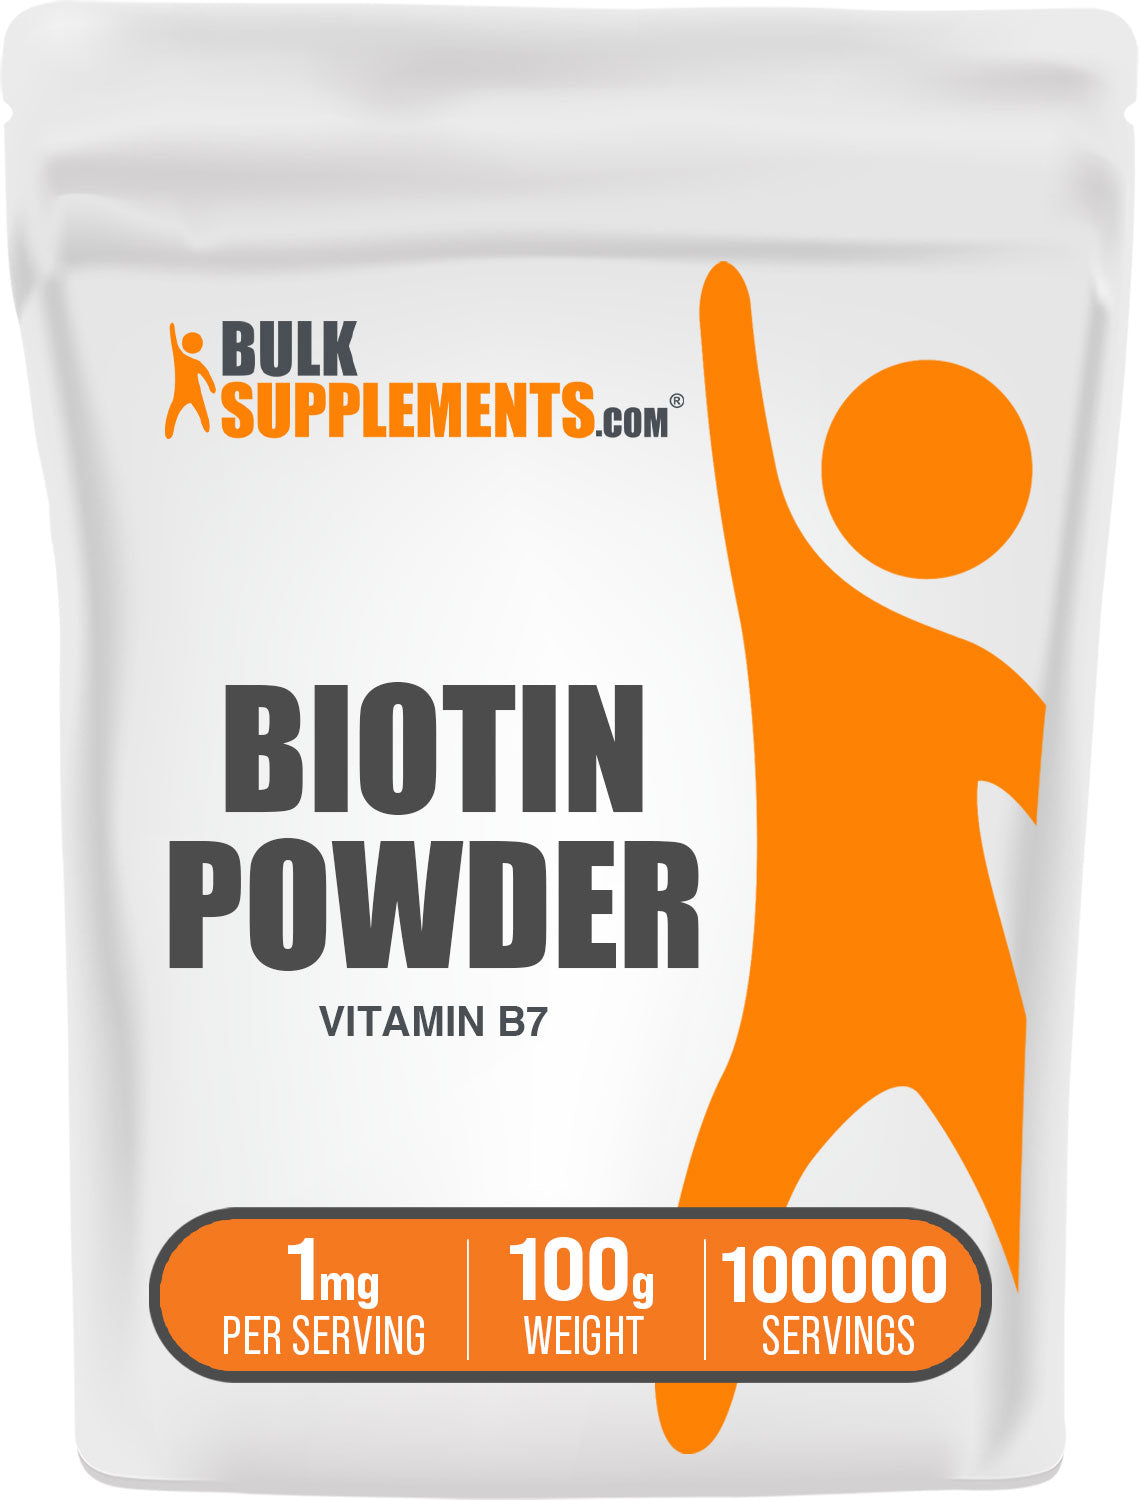 BulkSupplements Biotin Powder Vitamin B7 100g bag